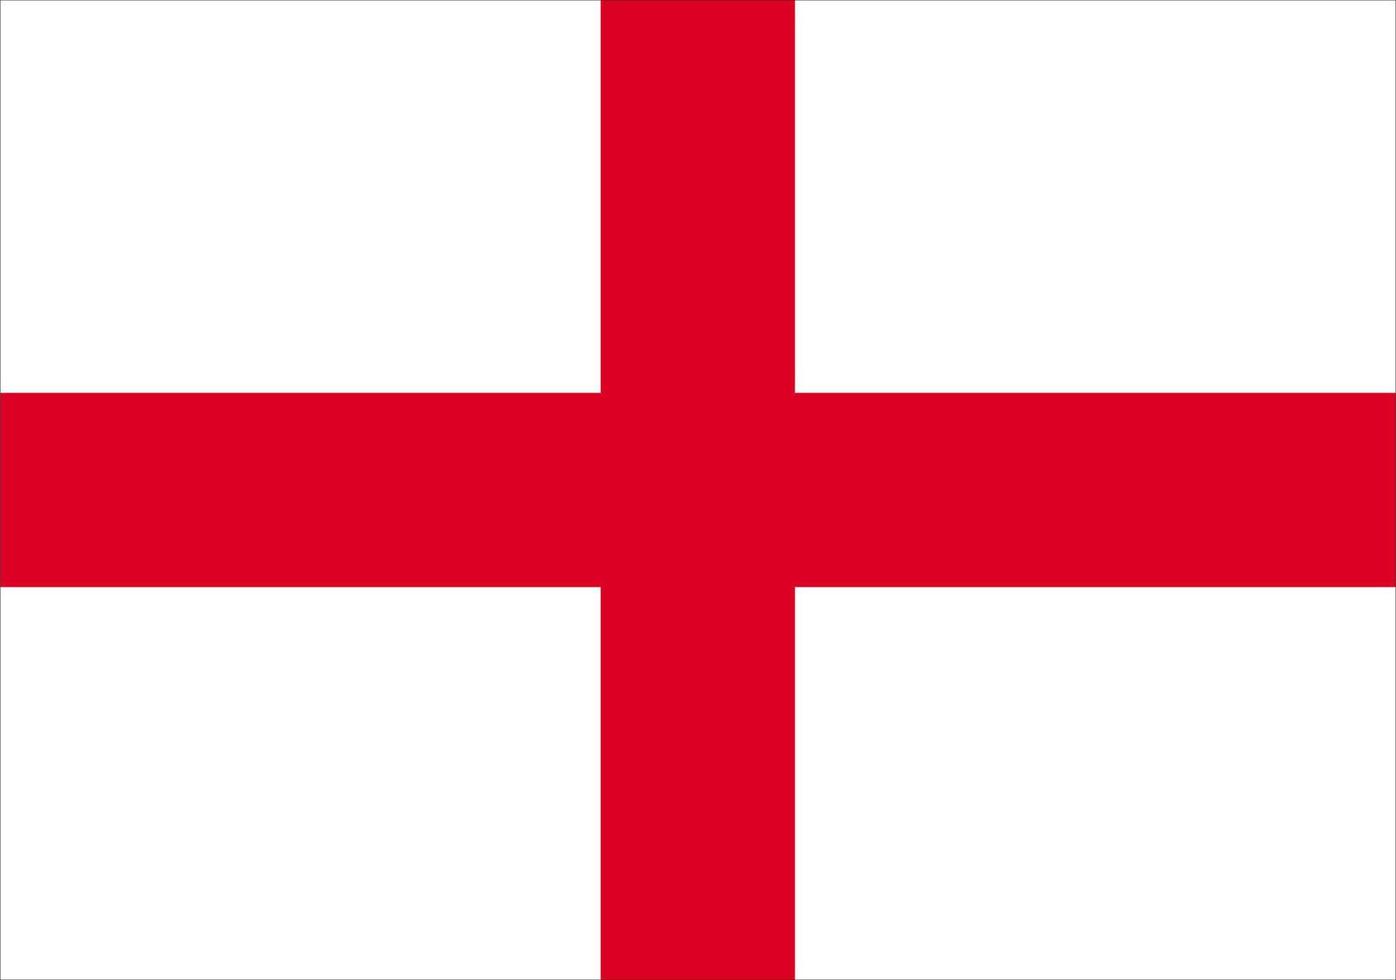 England flag, National flag of England vector illustration